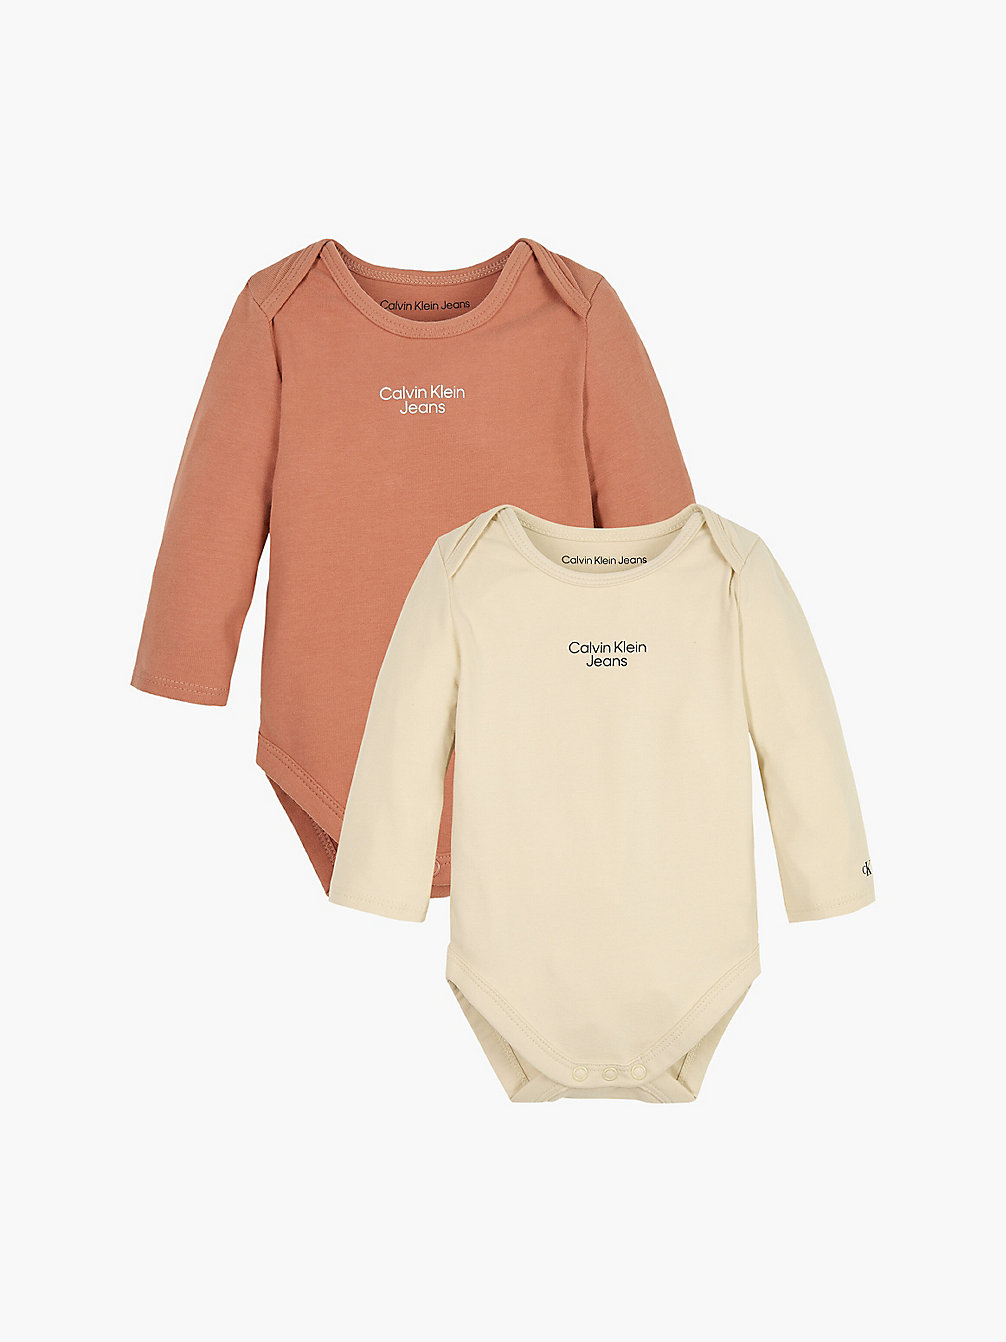 MUSLIN/COPPER REEF 2-Pack Newborn-Body undefined newborn Calvin Klein